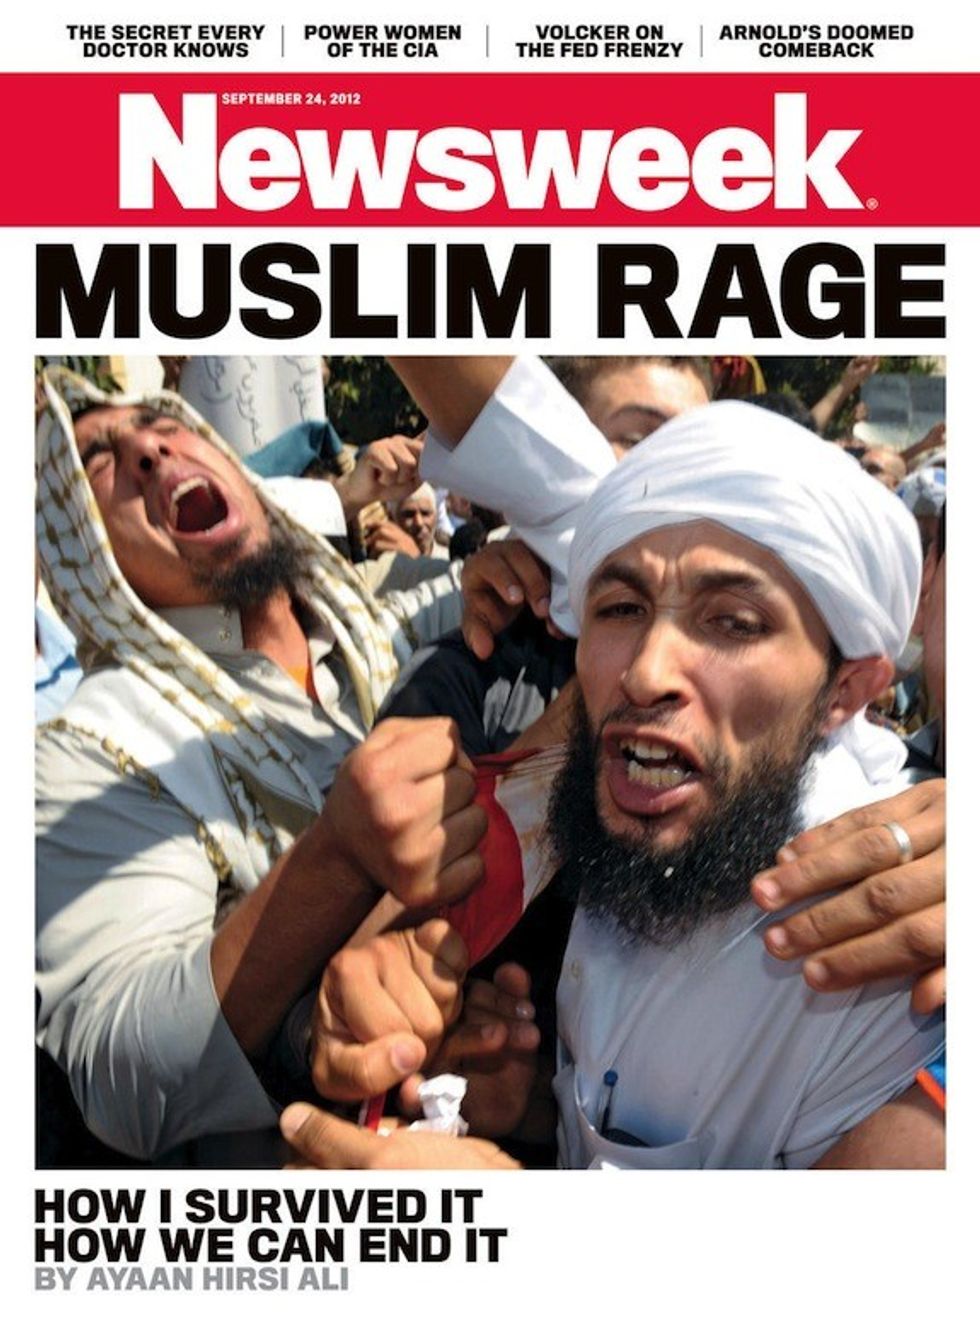 Newsweek Explores 'Muslim Rage' Through Stupid Cover